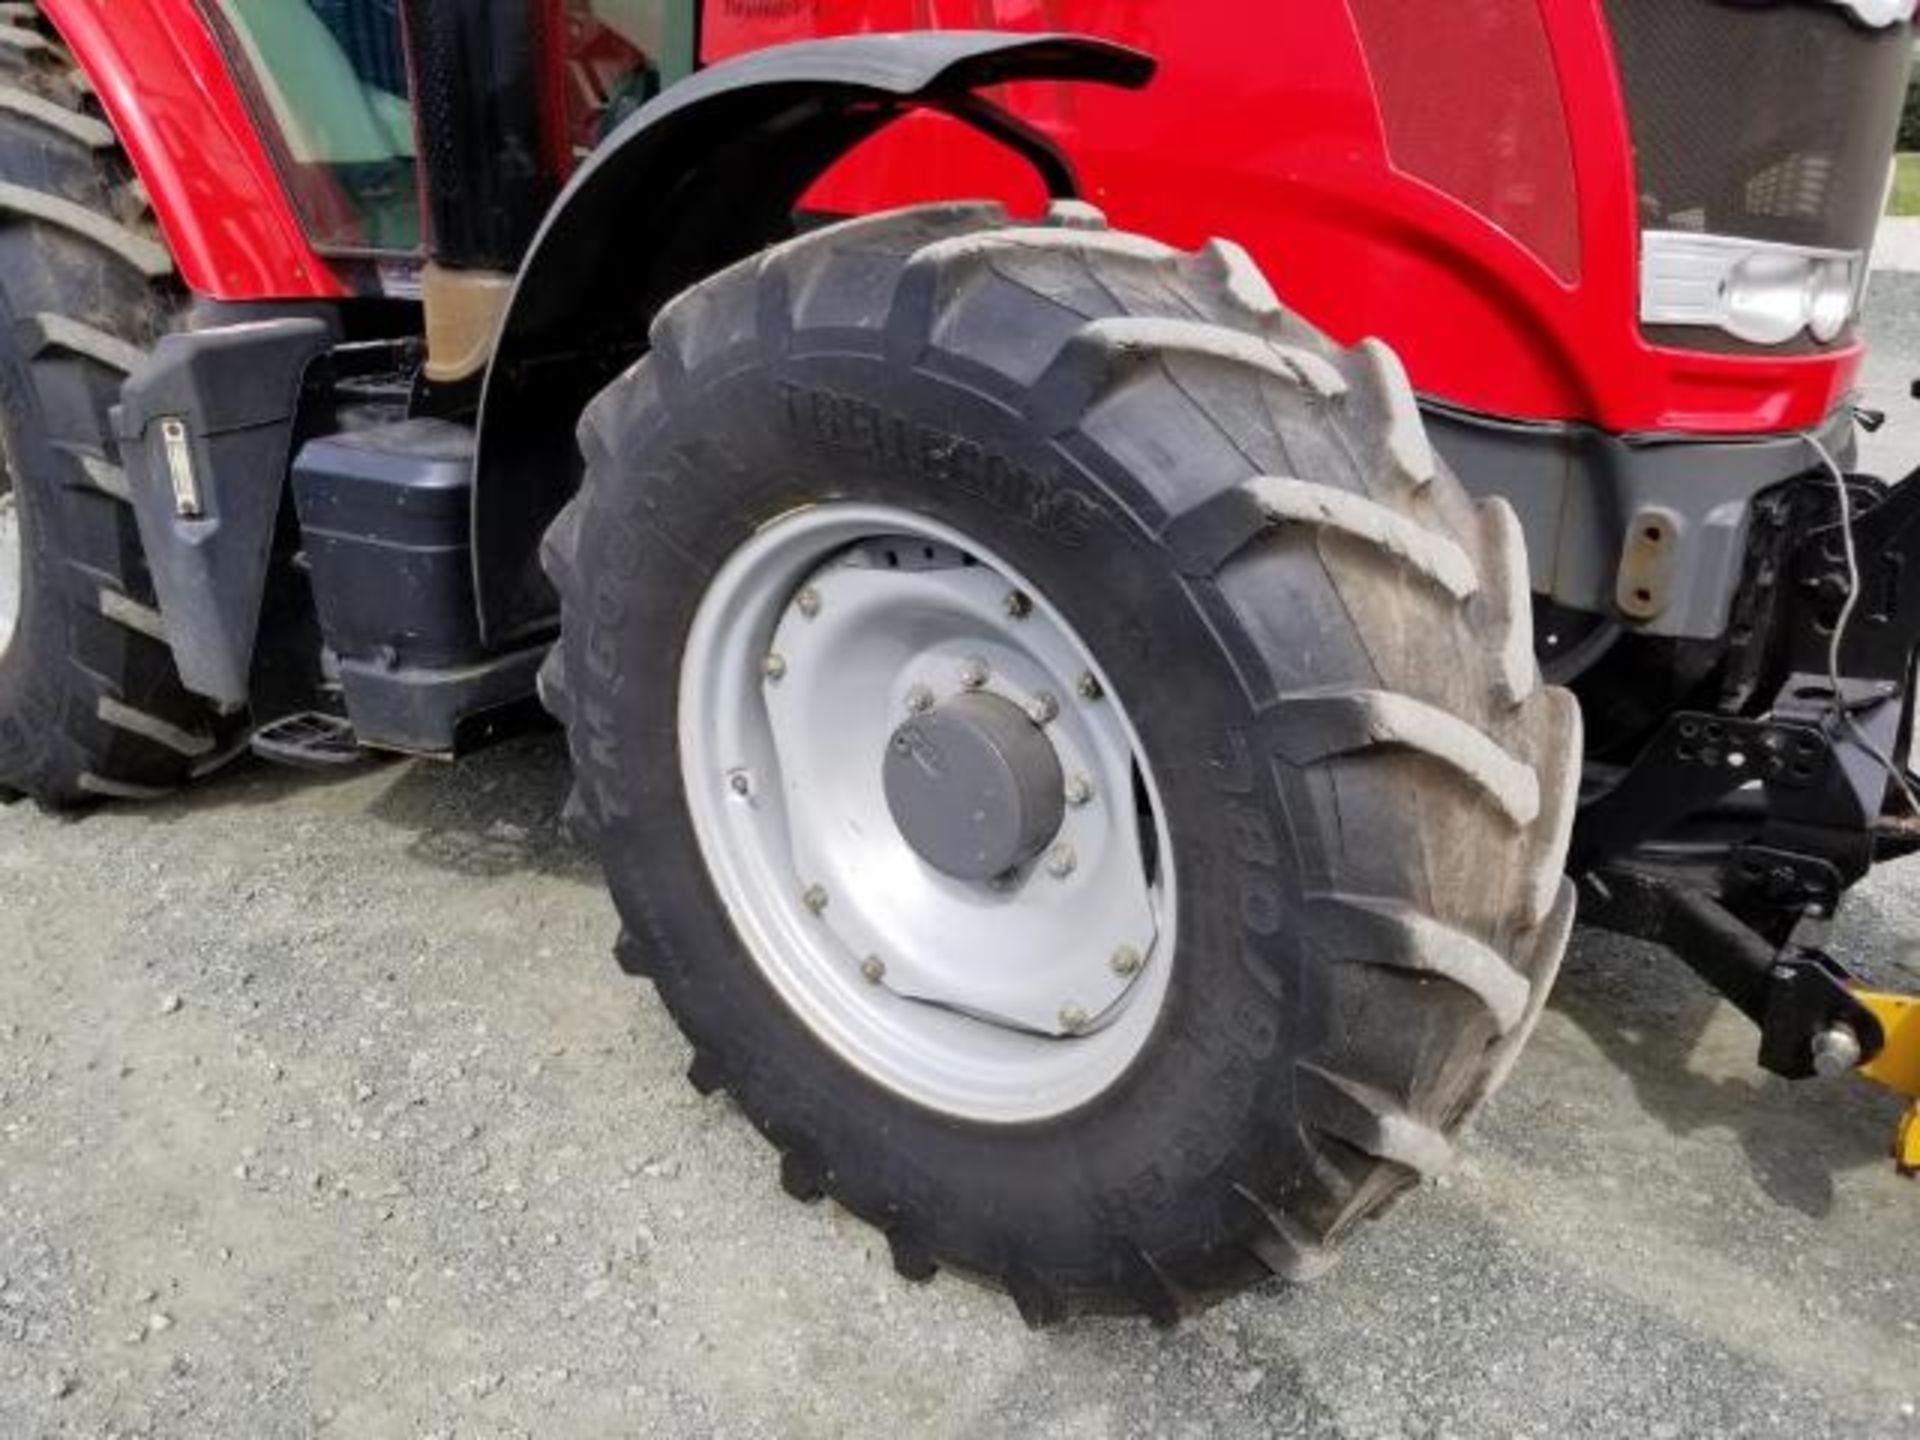 2014 Tracteur Massey Fugerson MF661, 1214 hres, 150 HP, 4 cyl., diesel, pneus av. 380/85R28 arr. - Image 3 of 19